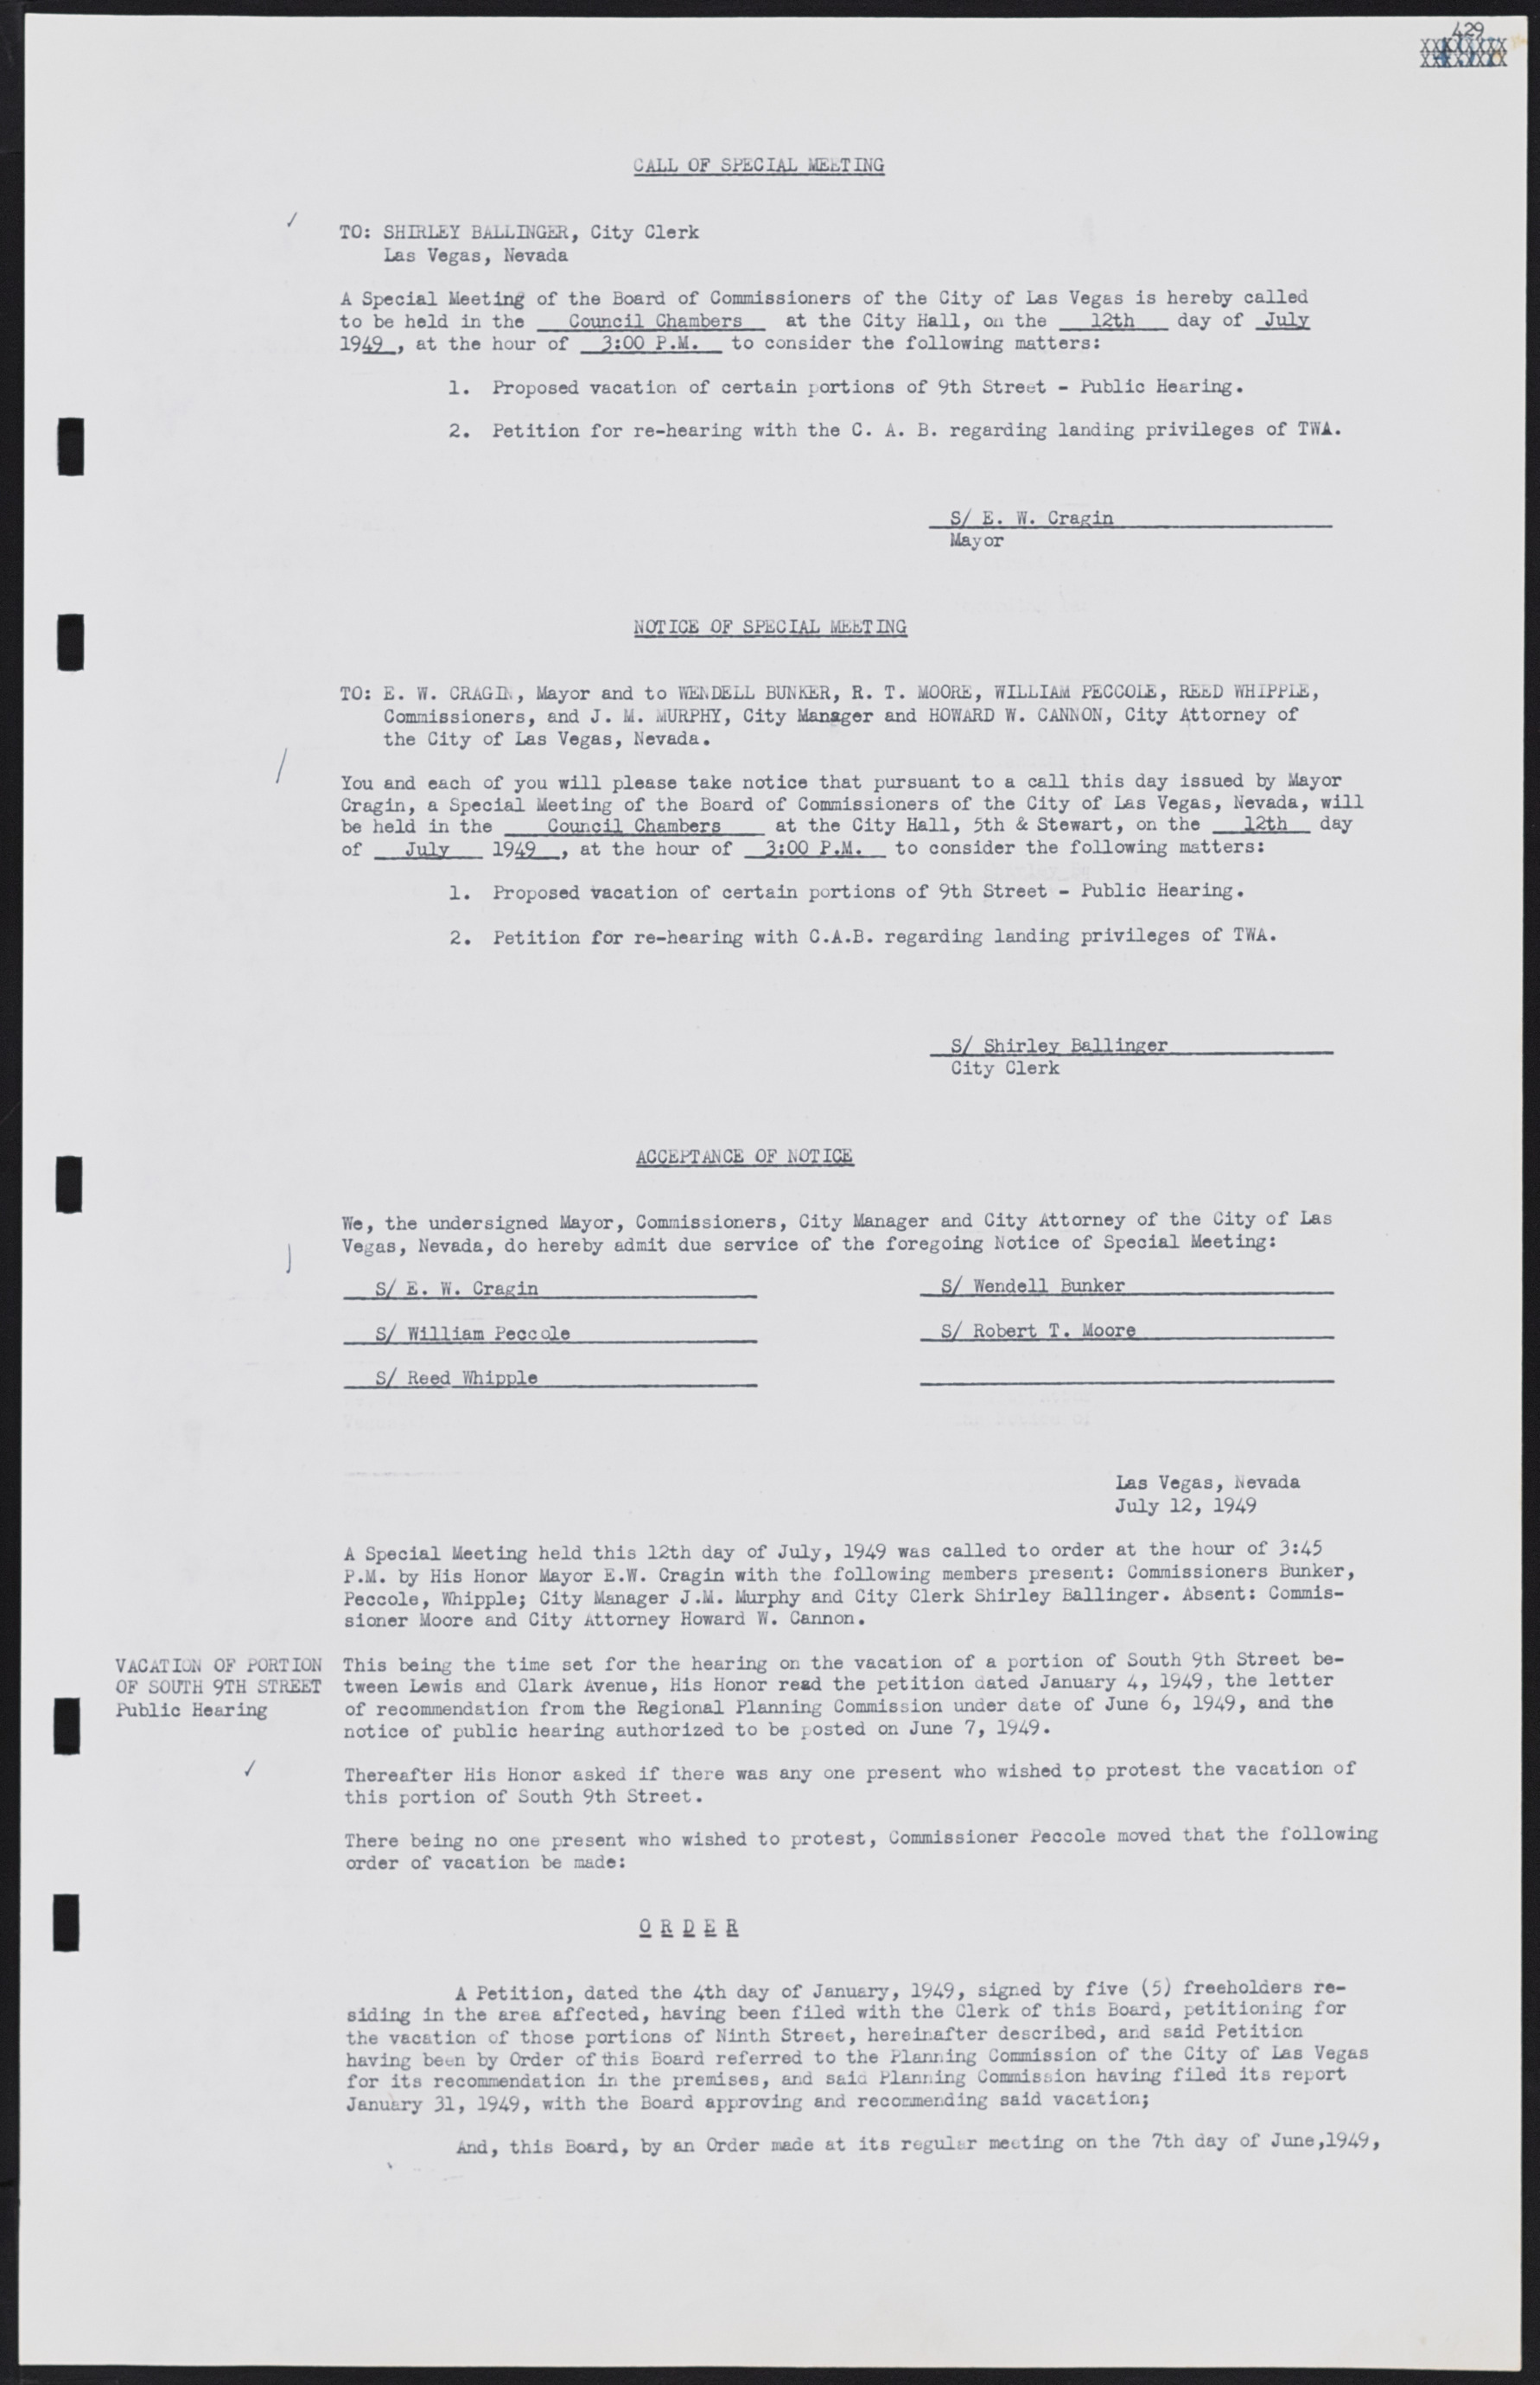 Las Vegas City Commission Minutes, January 7, 1947 to October 26, 1949, lvc000006-461